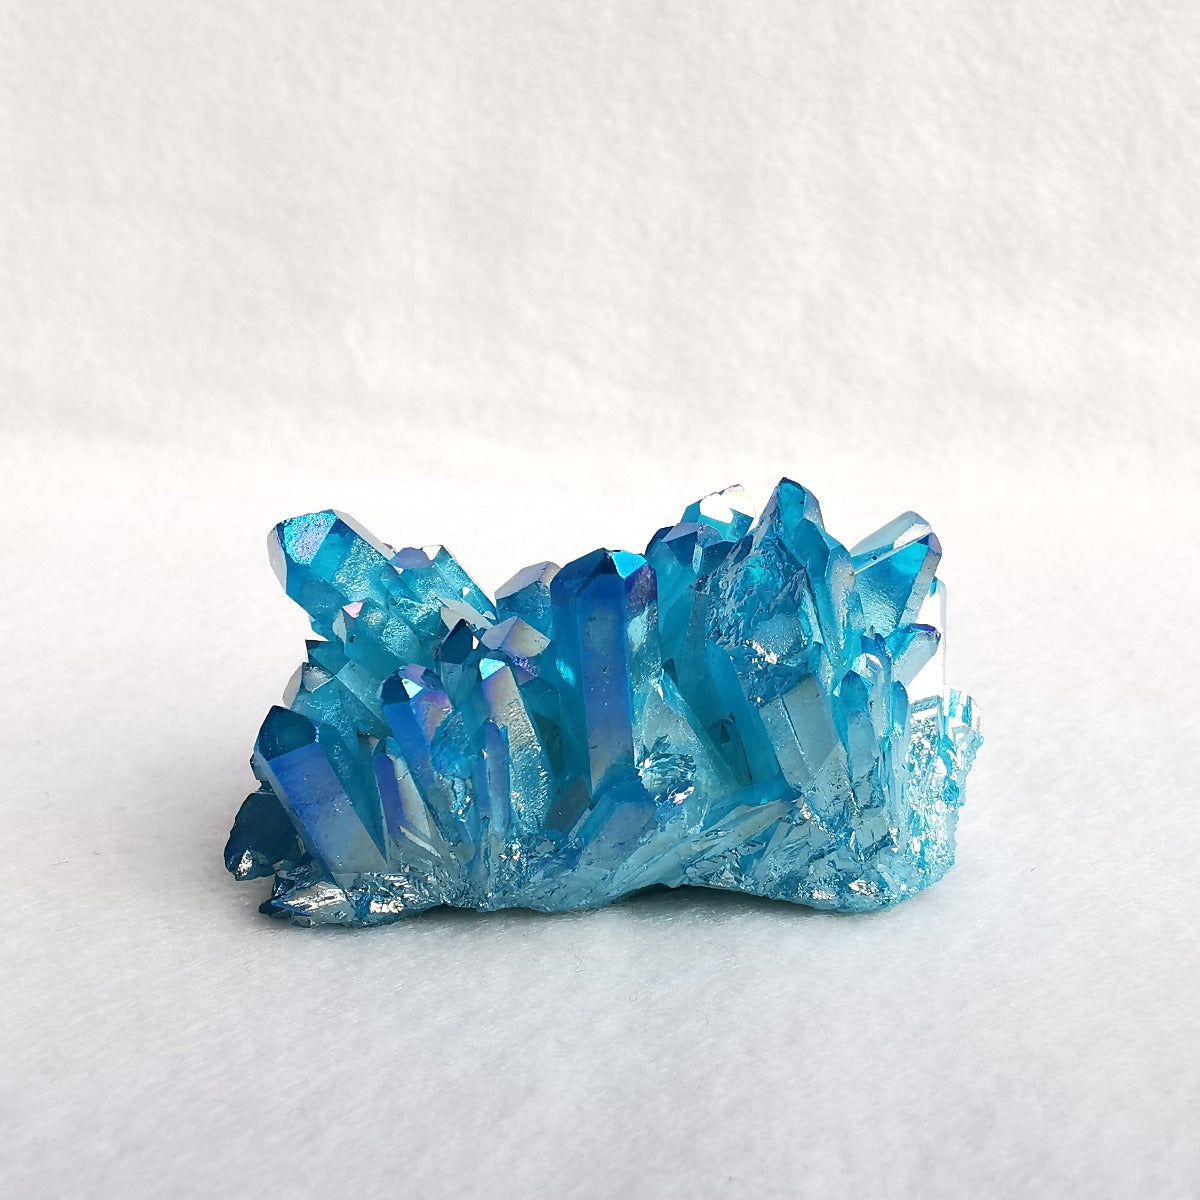 Aqua aura bergkrystall krystallgruppe 66  gram